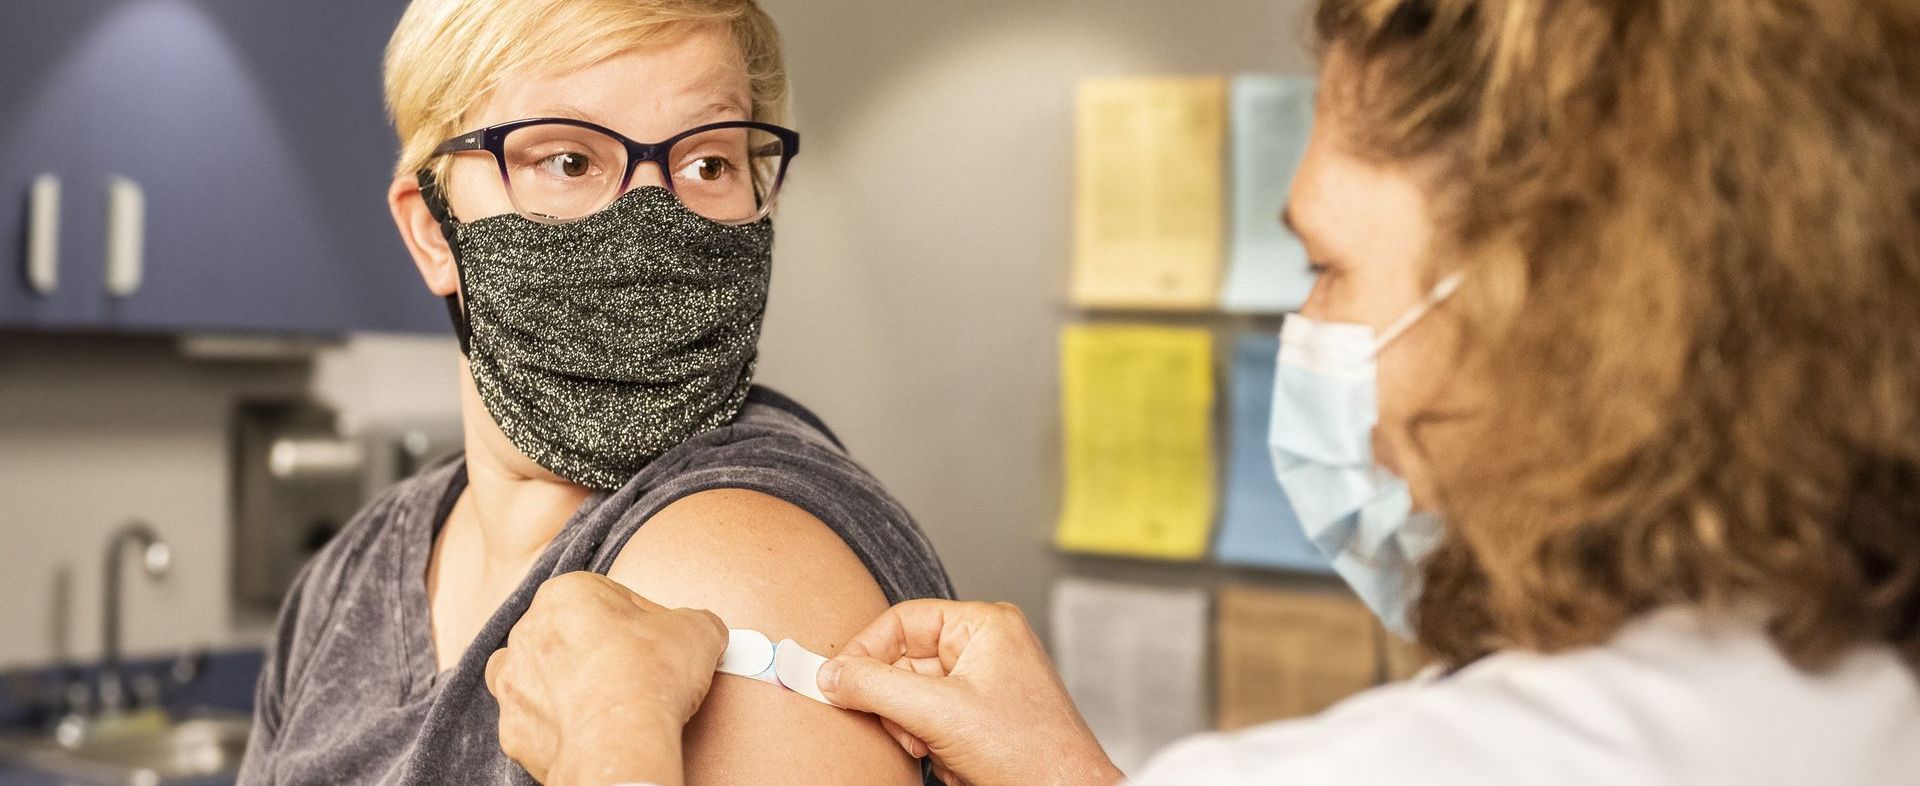 woman getting vaccine